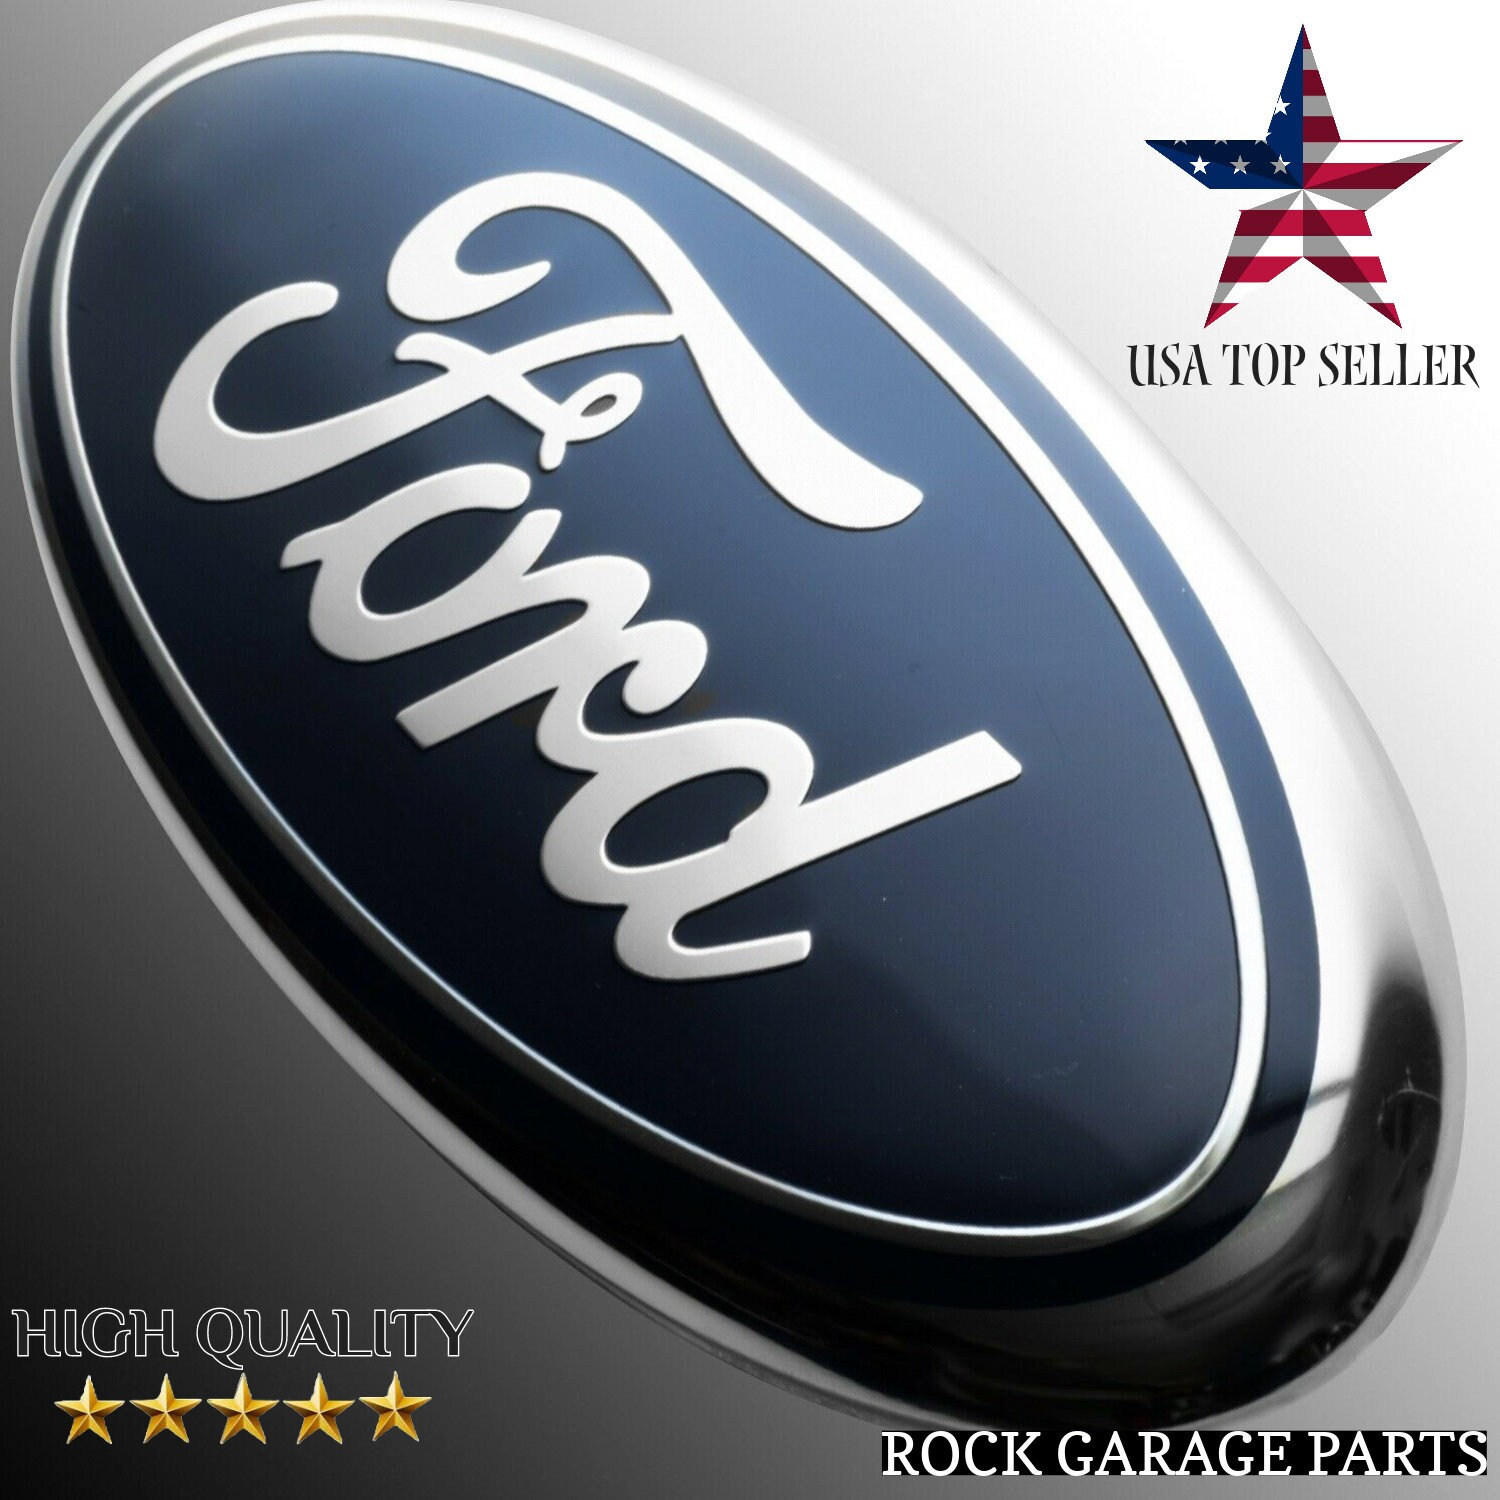 Ford motor company logo car ford ranger, ford, emblema, empresa